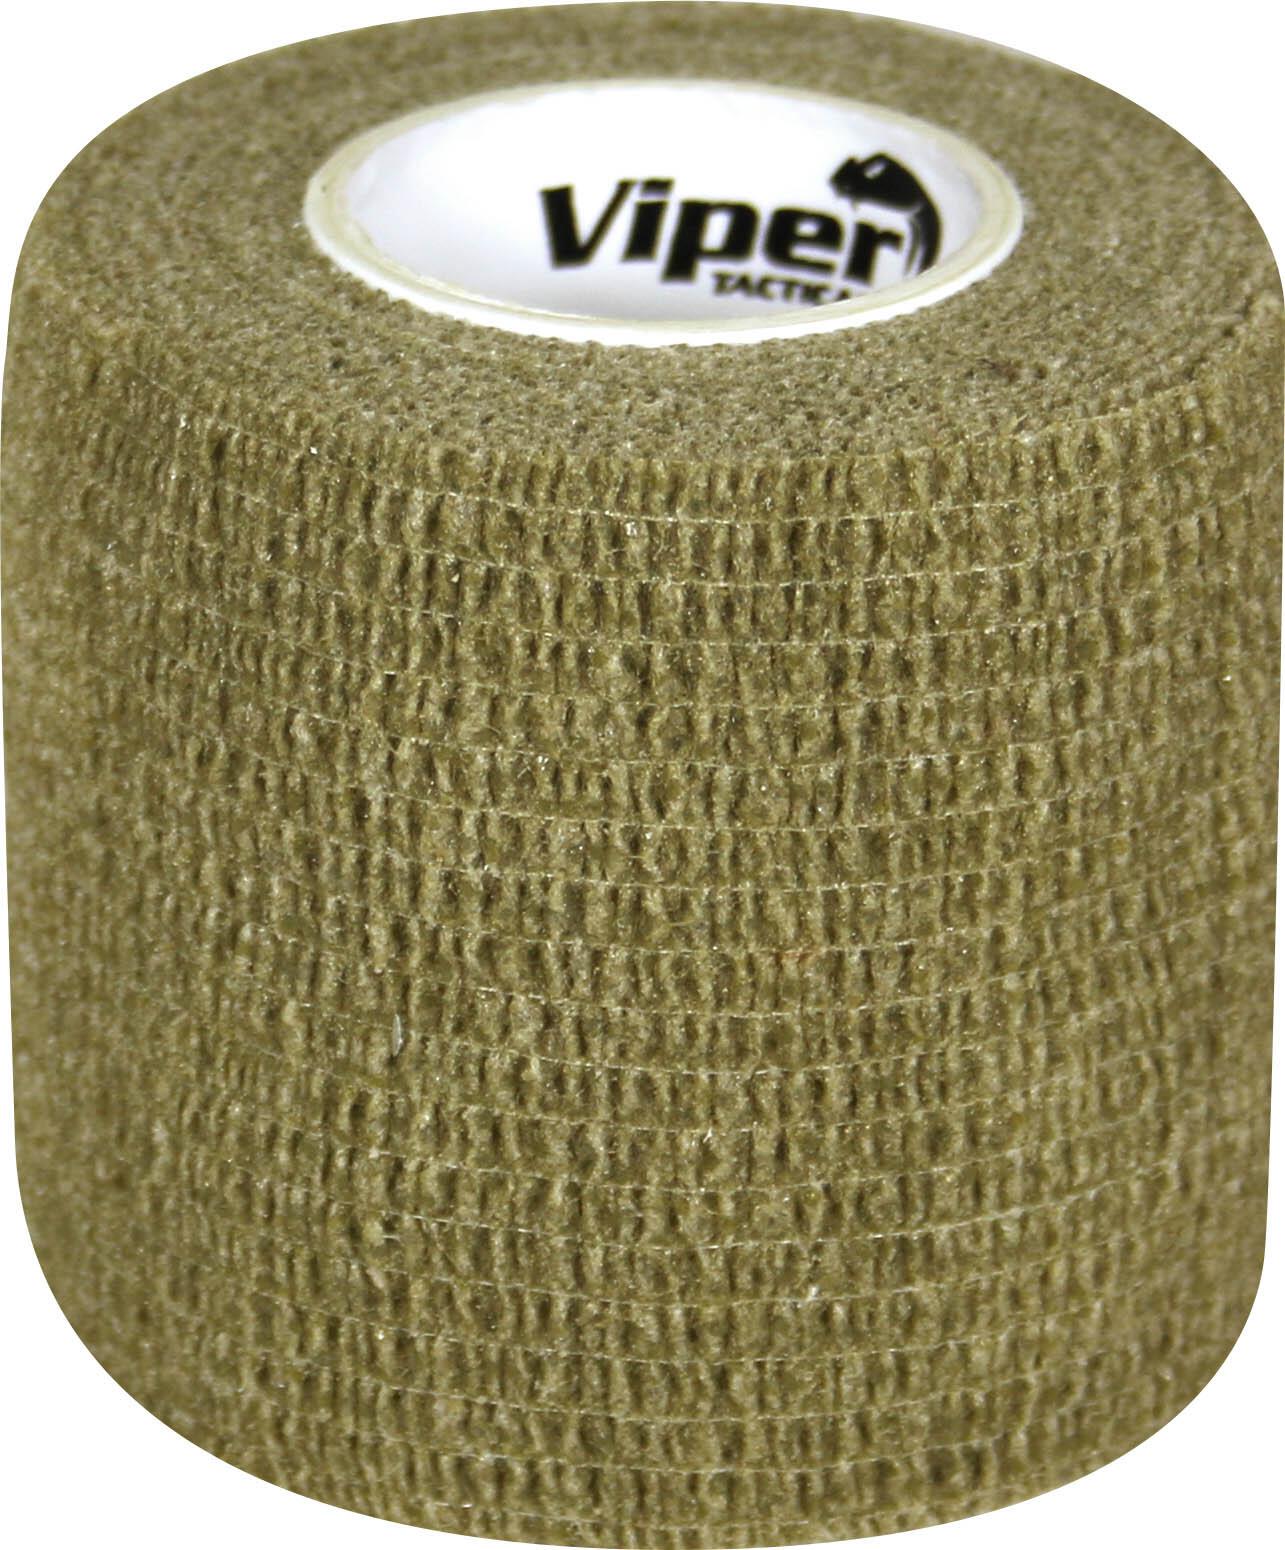 Viper Camo Tape Stealth selbsthaftend grün